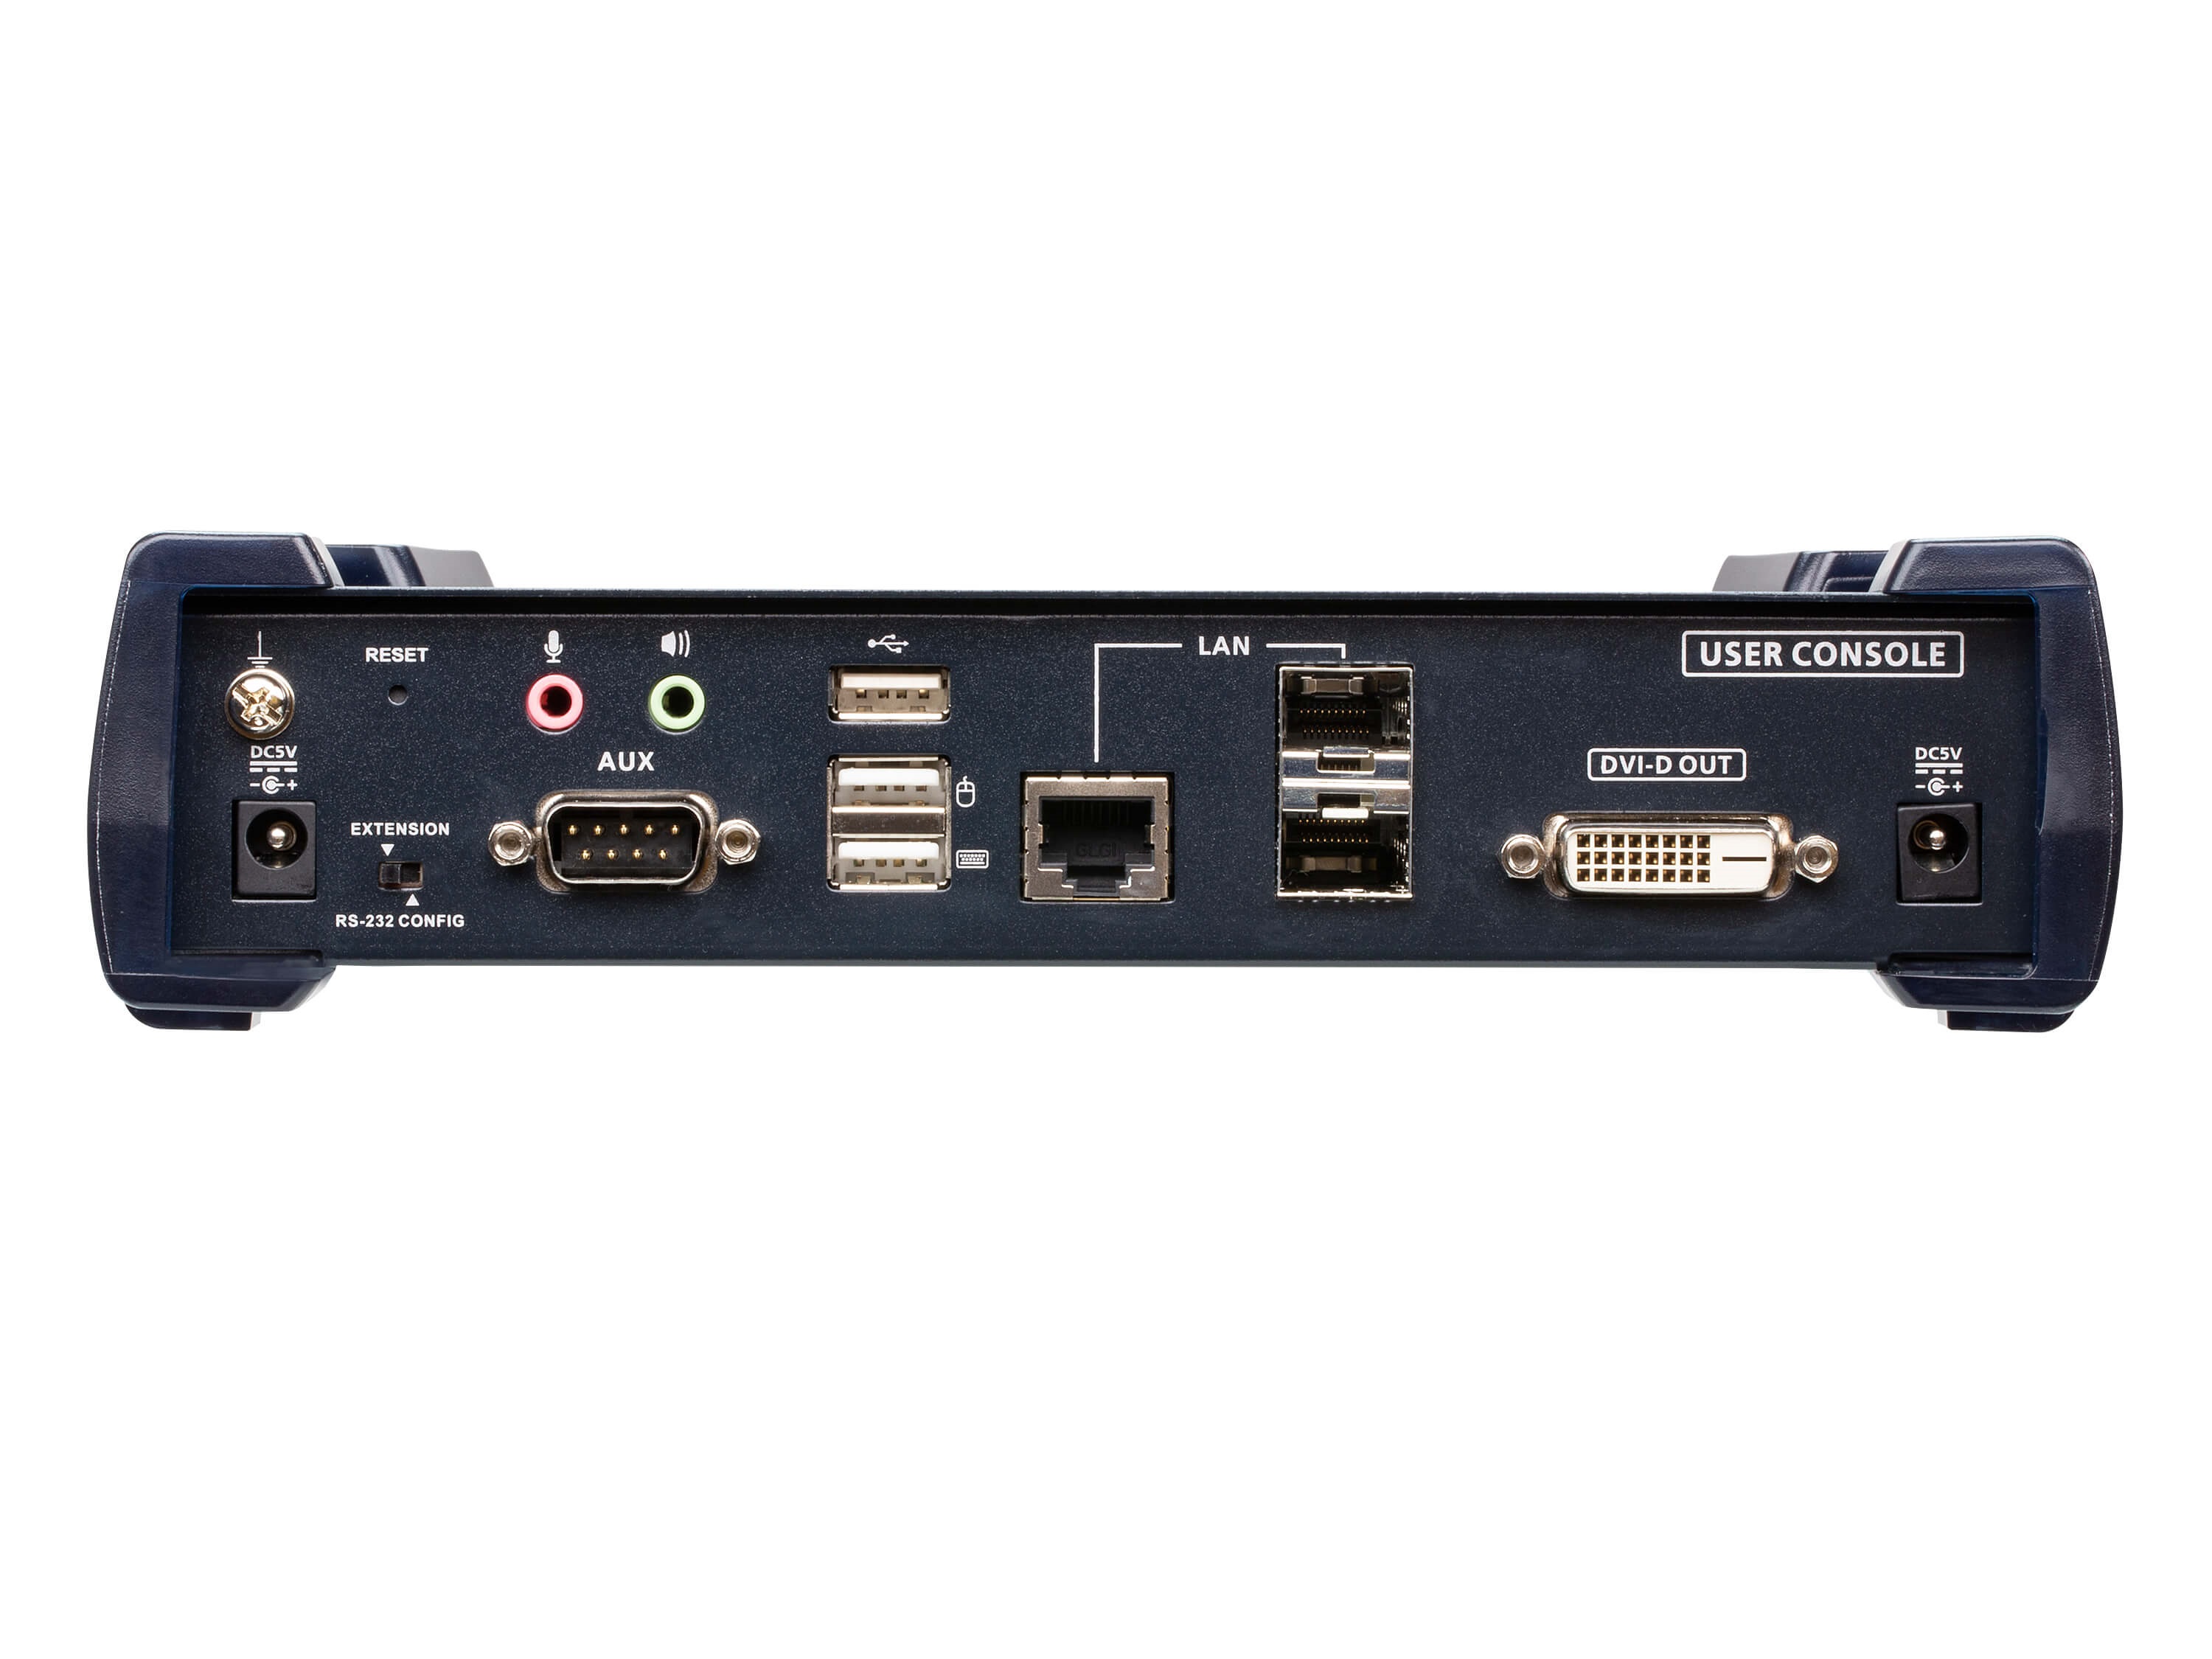 KE6920R 2K DVI-D Dual-Link KVM over IP Receiver with Dual SFP by Aten